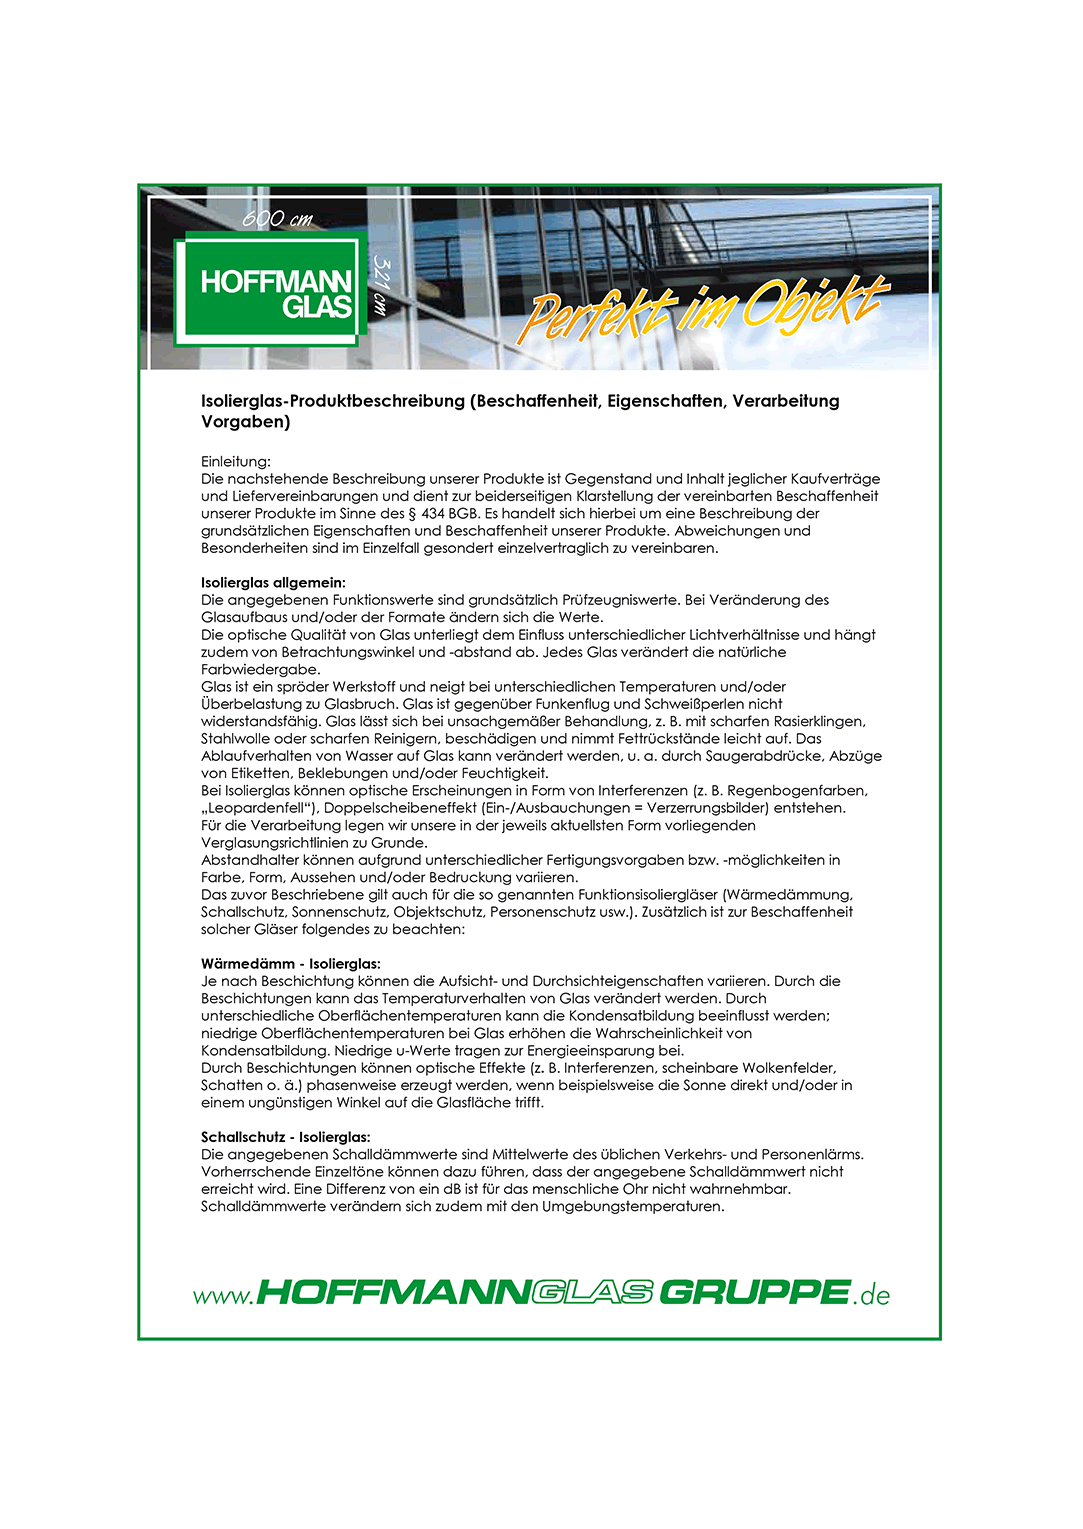 HoffmannGlas Gruppe - Isolierglas-Produktbeschreibung